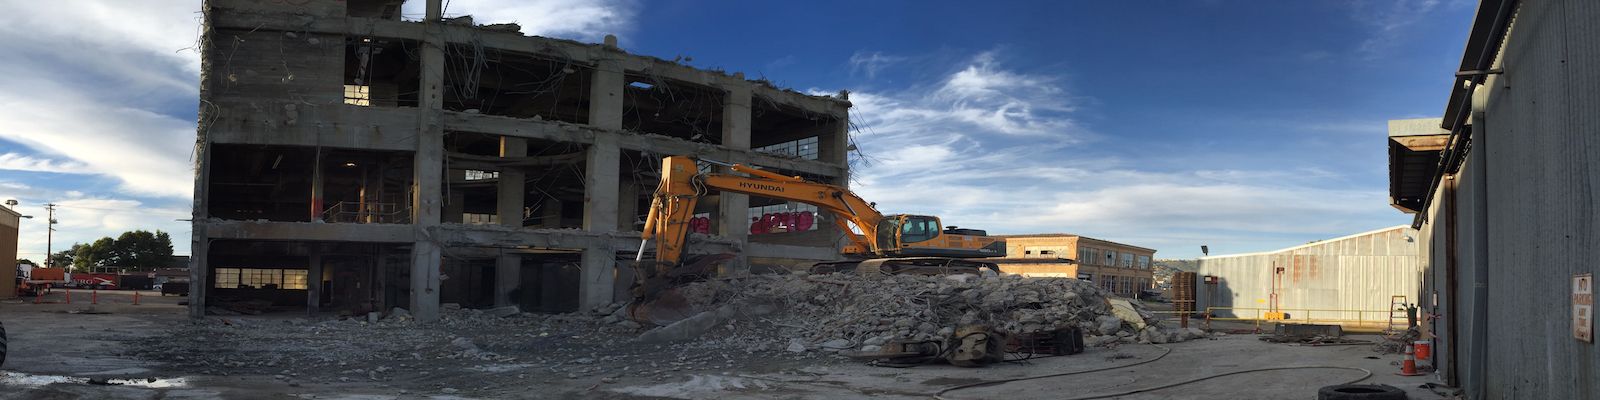 Demolition Project - Oakland, CA